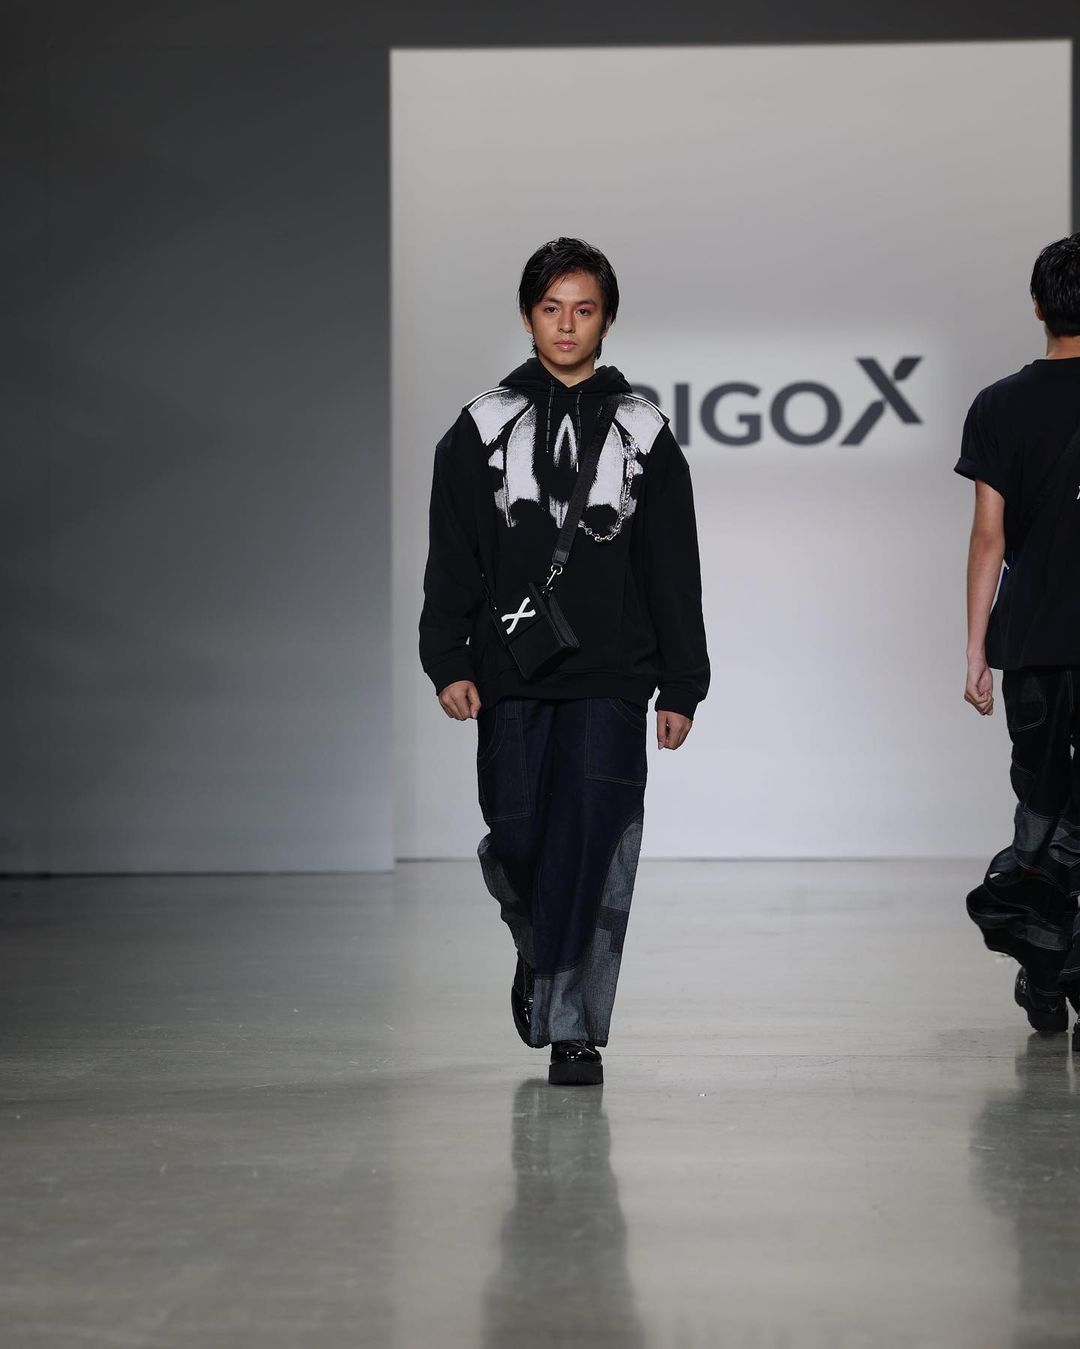 Indonesian Musician's Style at Runway ERIGO-X New York Fashion Week